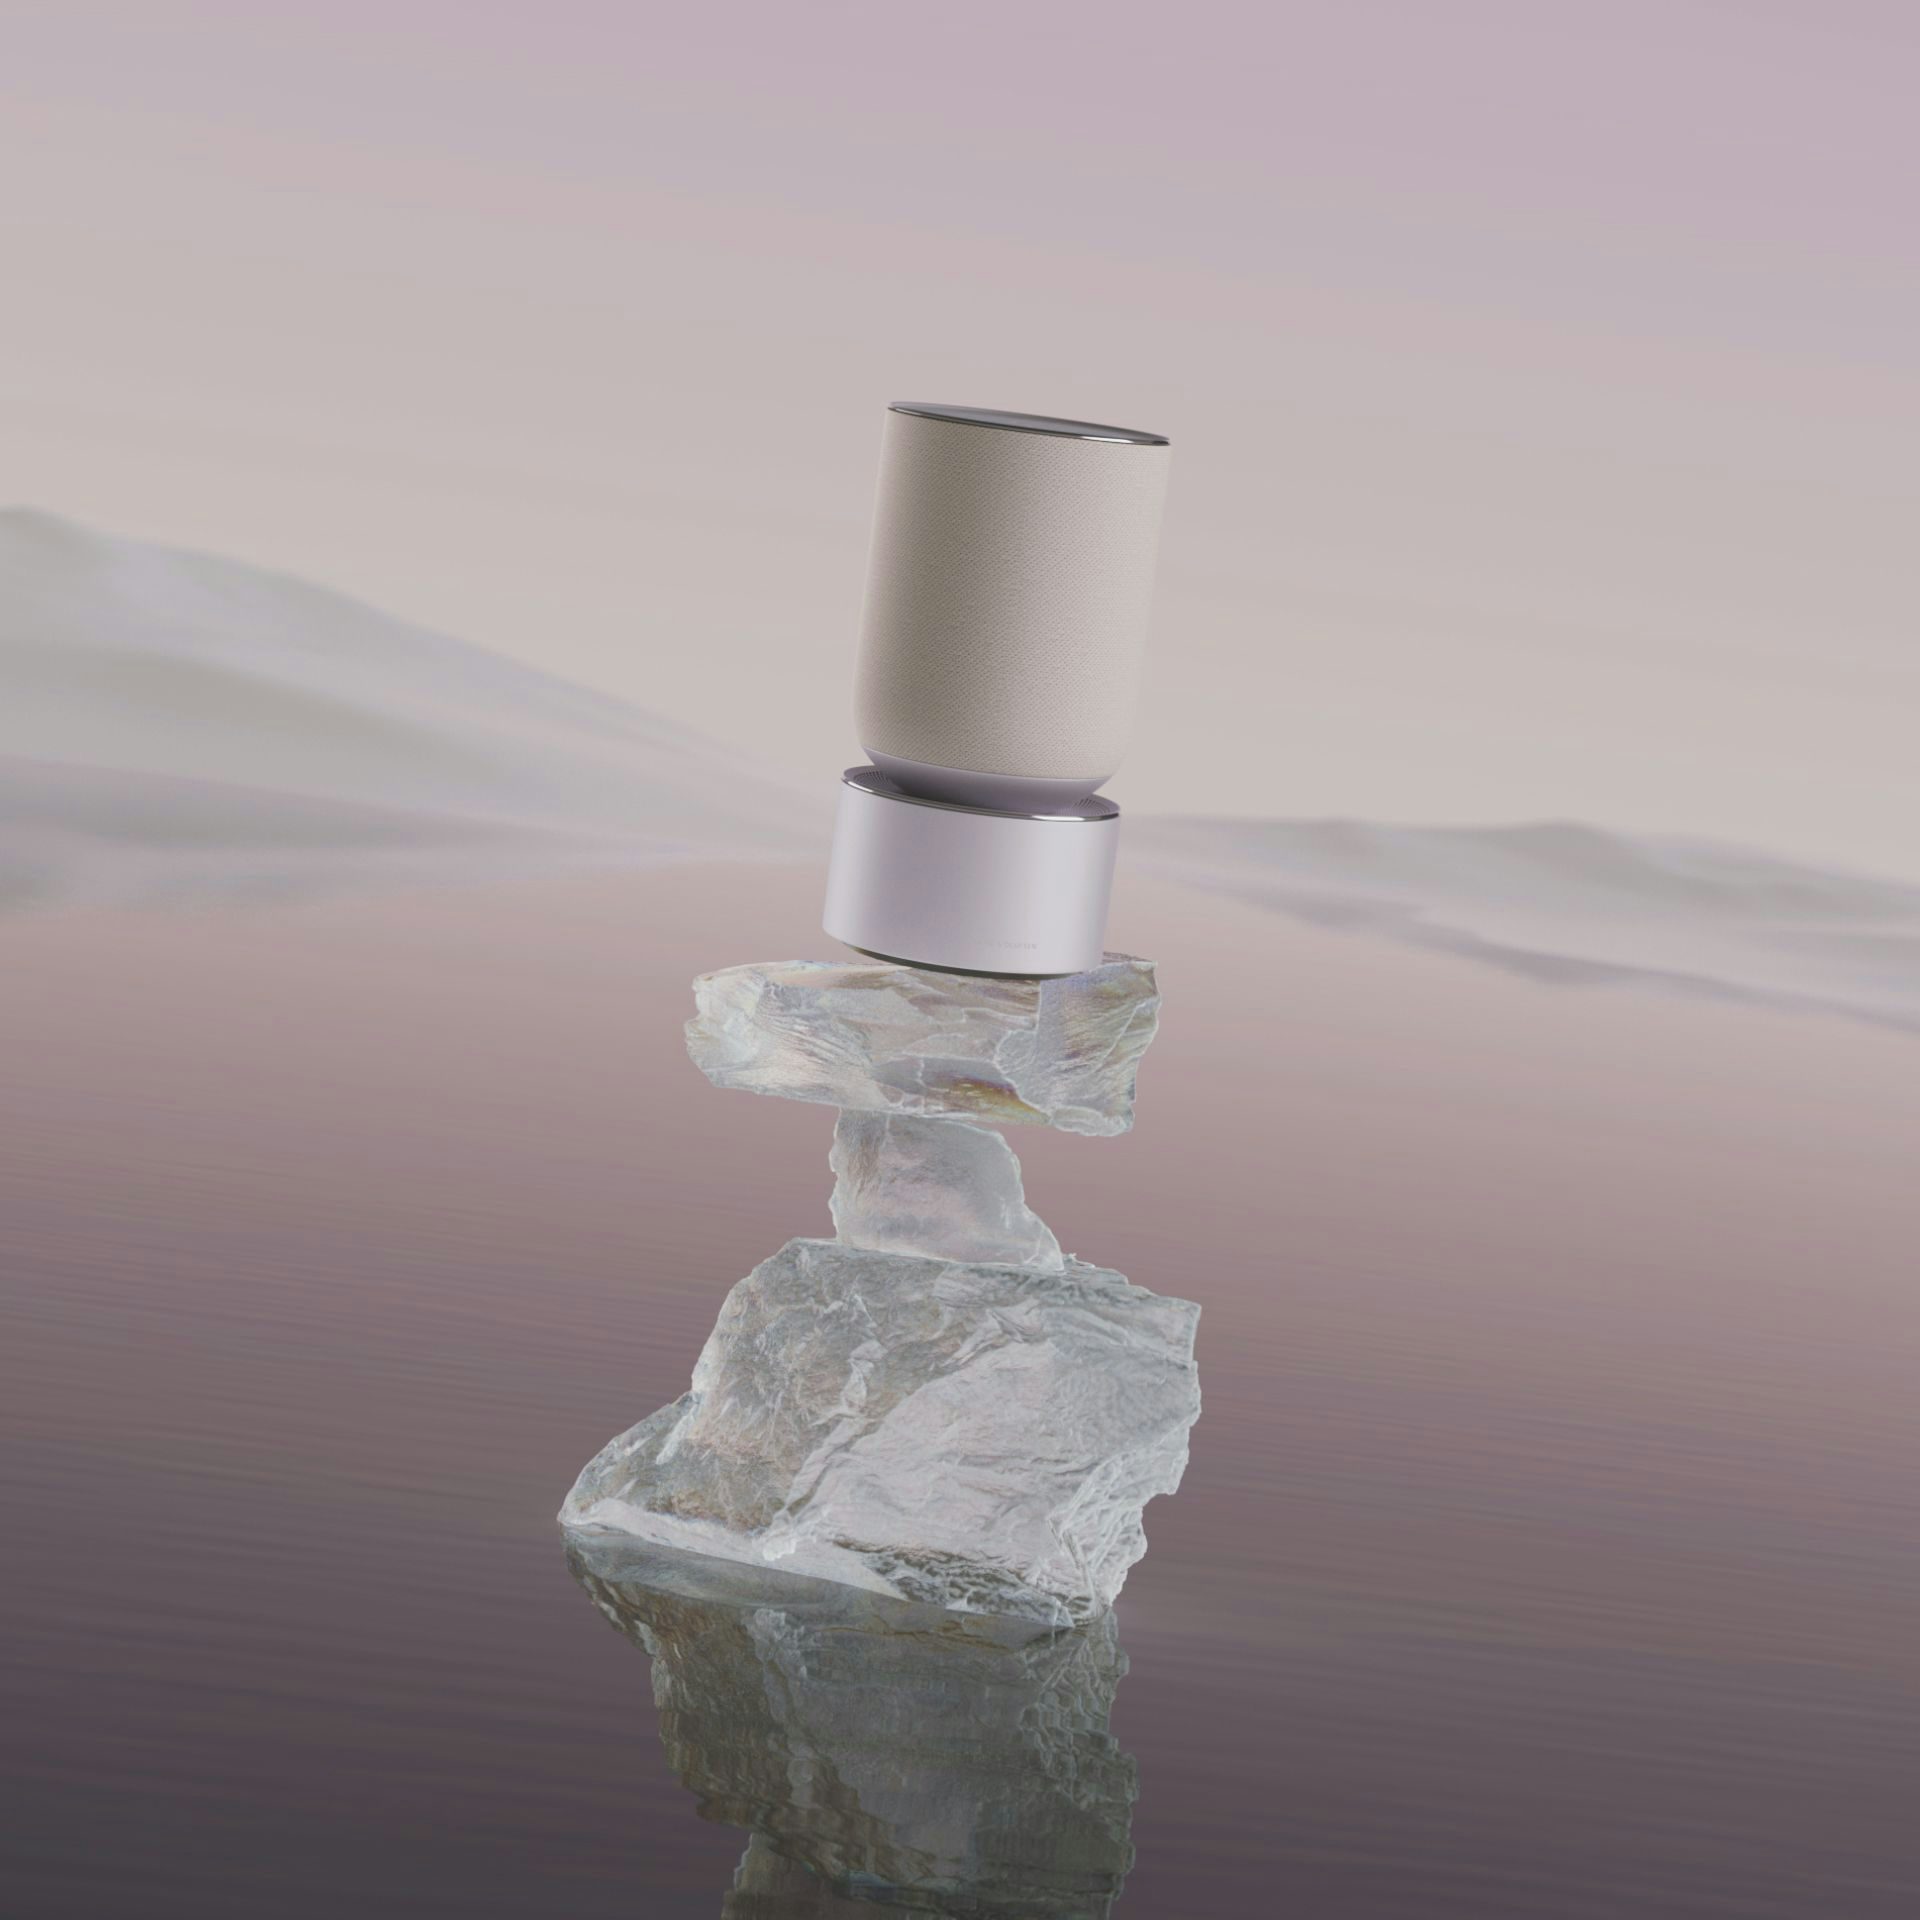 Photo of a Bang & Olufsen speaker balanced on ice chunks in a polar setting.